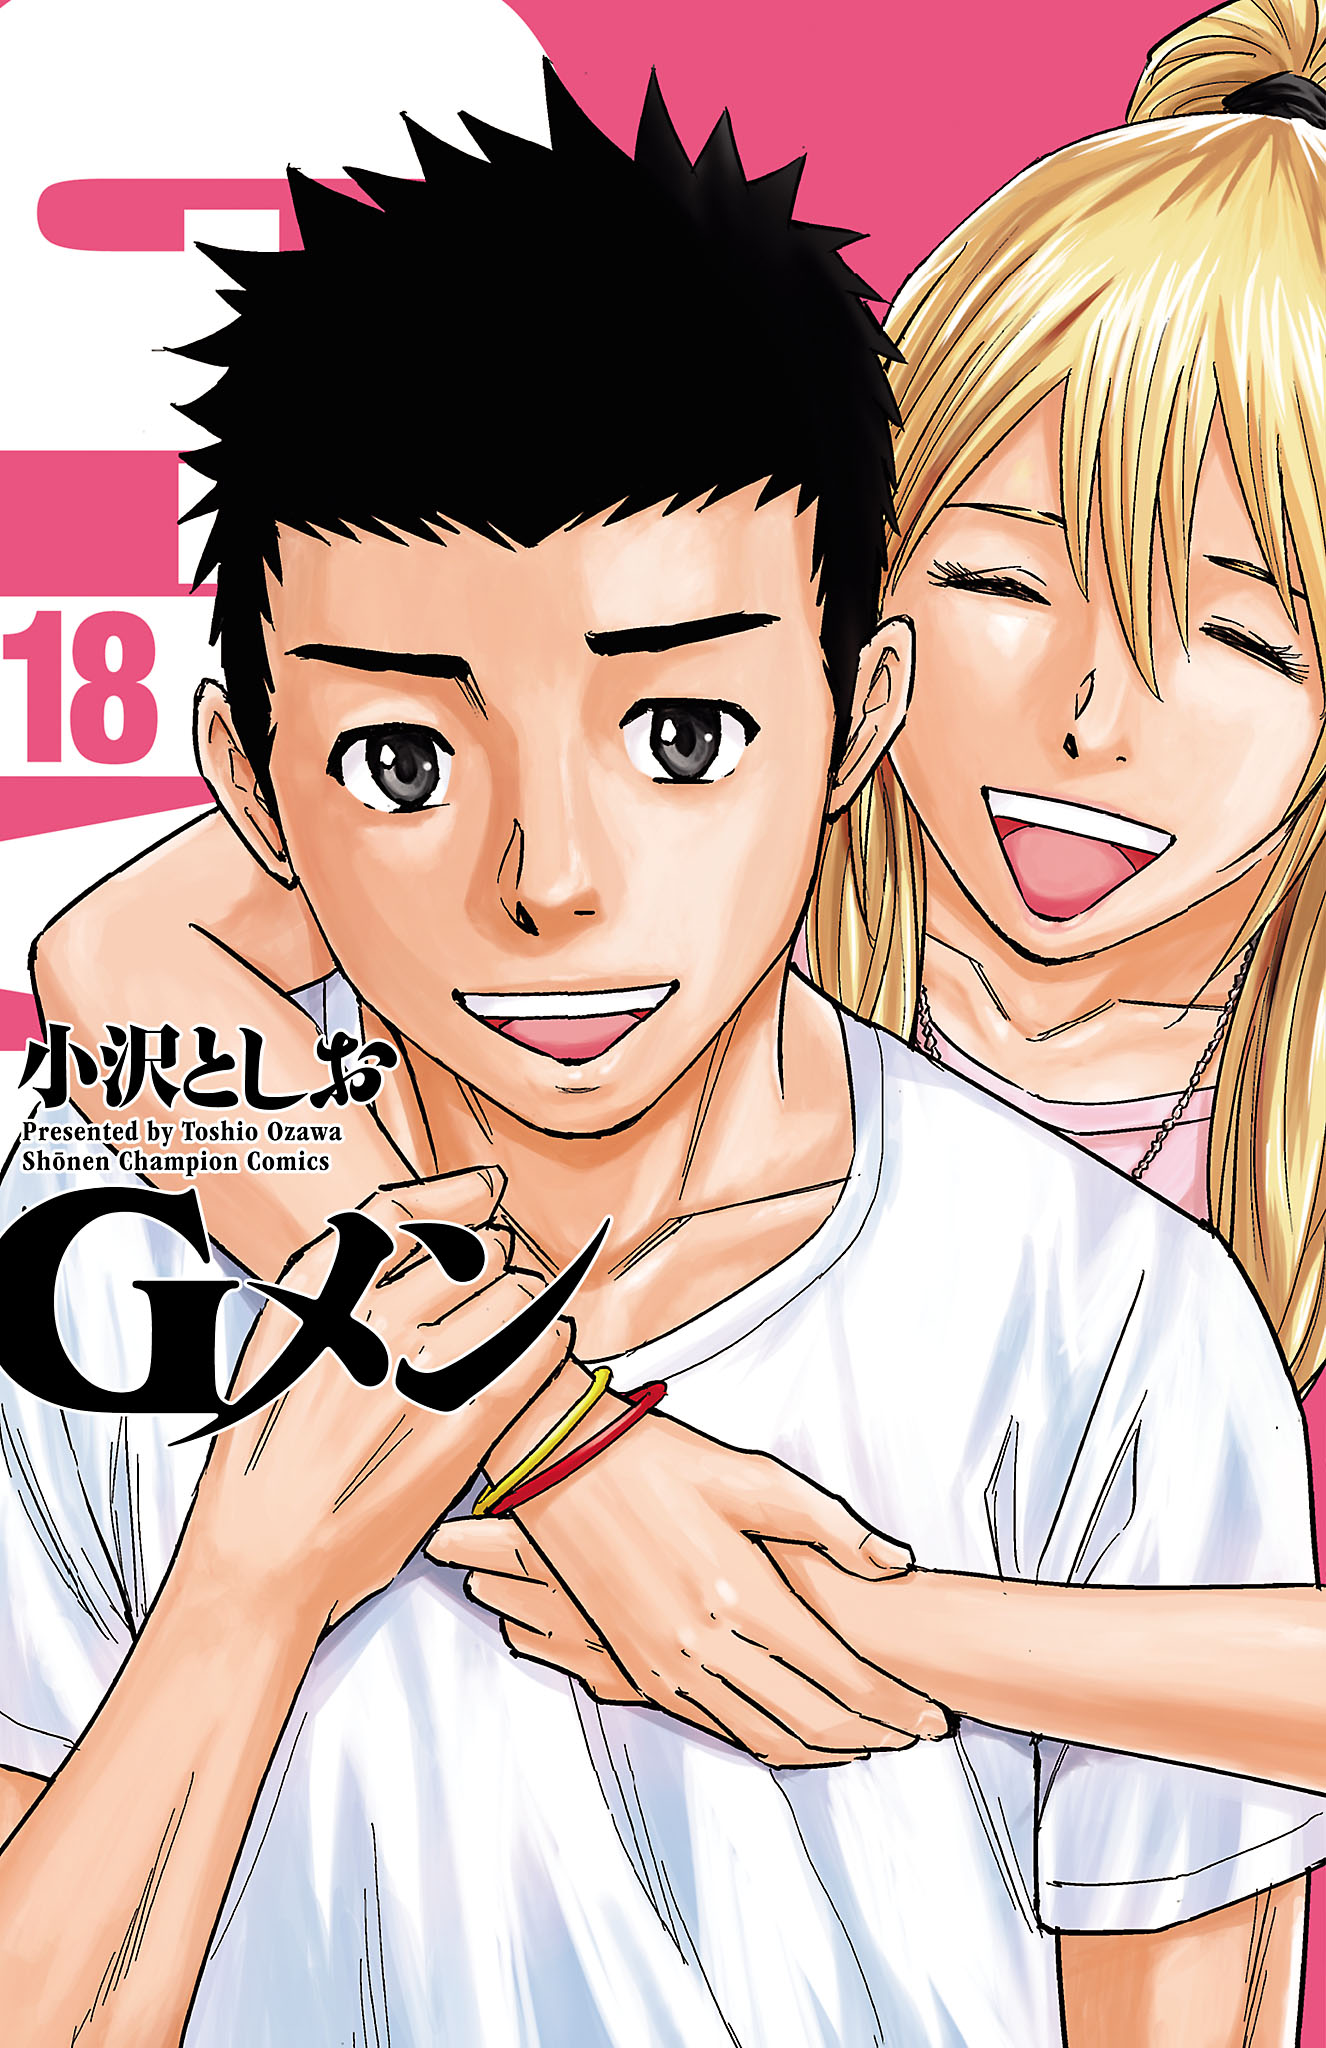 Gメン(マンガ) - 電子書籍 | U-NEXT 初回600円分無料